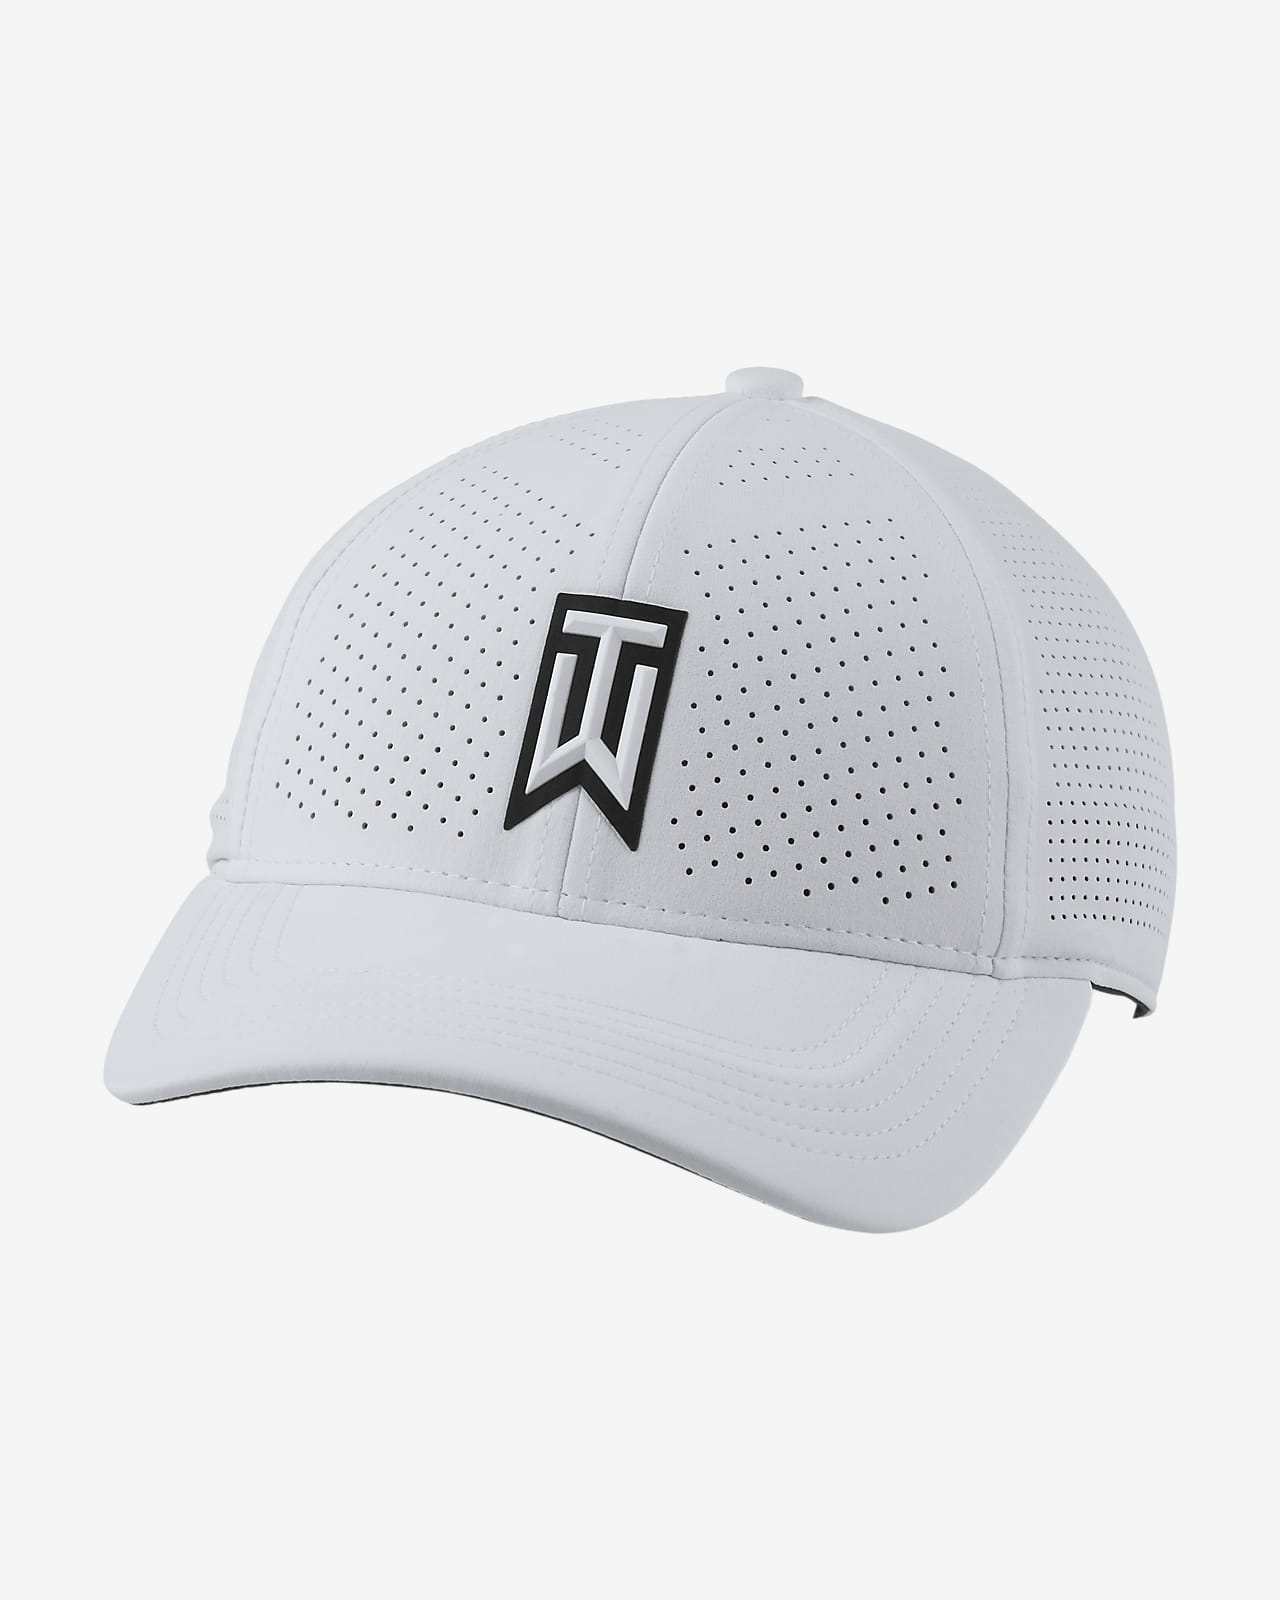 tiger golf hat